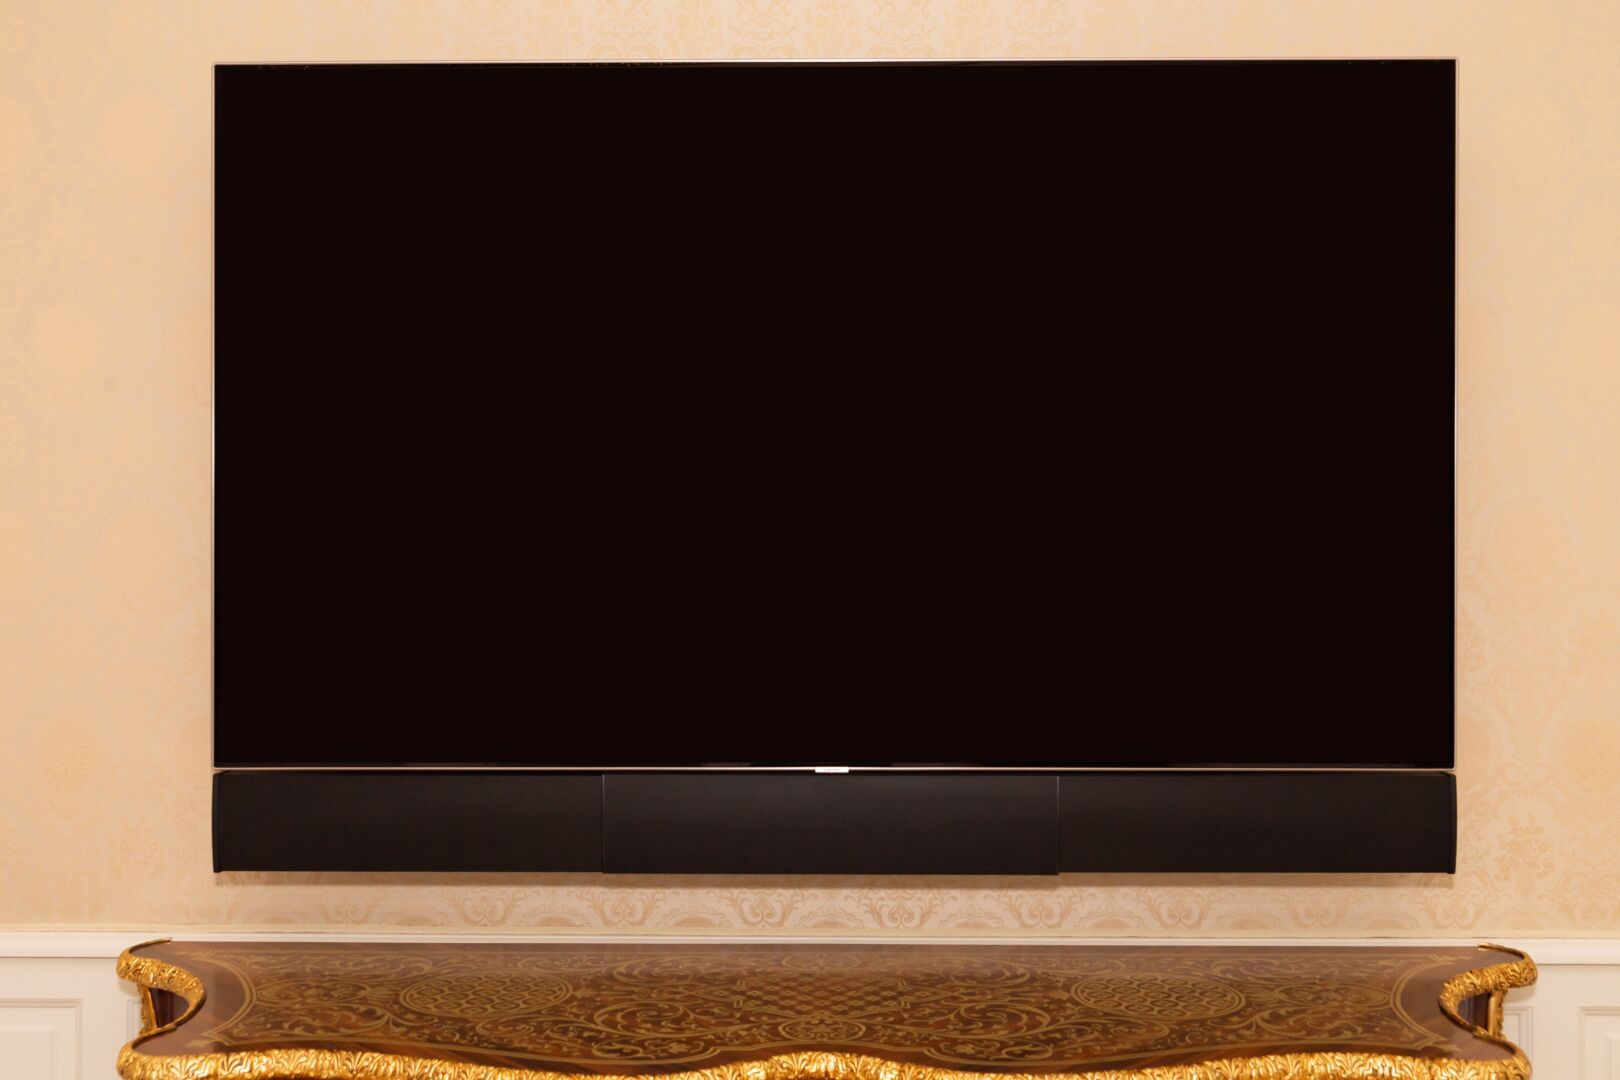 Null SAMSUNG QE75Q7FAMTXXC large flat screen TV, 190 cm.

Assumed version: 2017,&hellip;